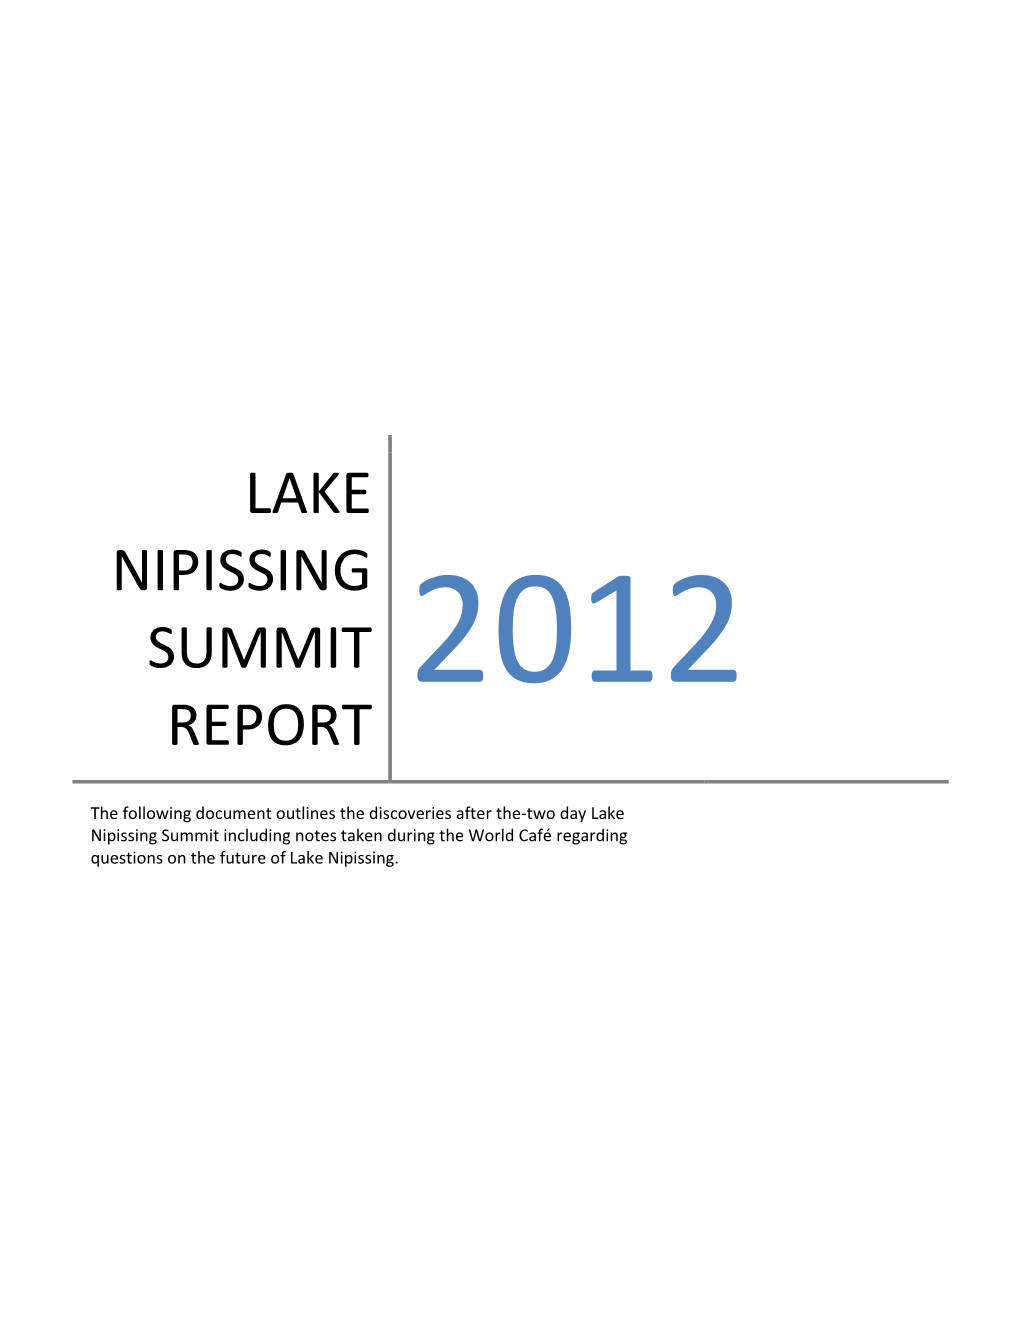 Lake Nipissing Summit Report